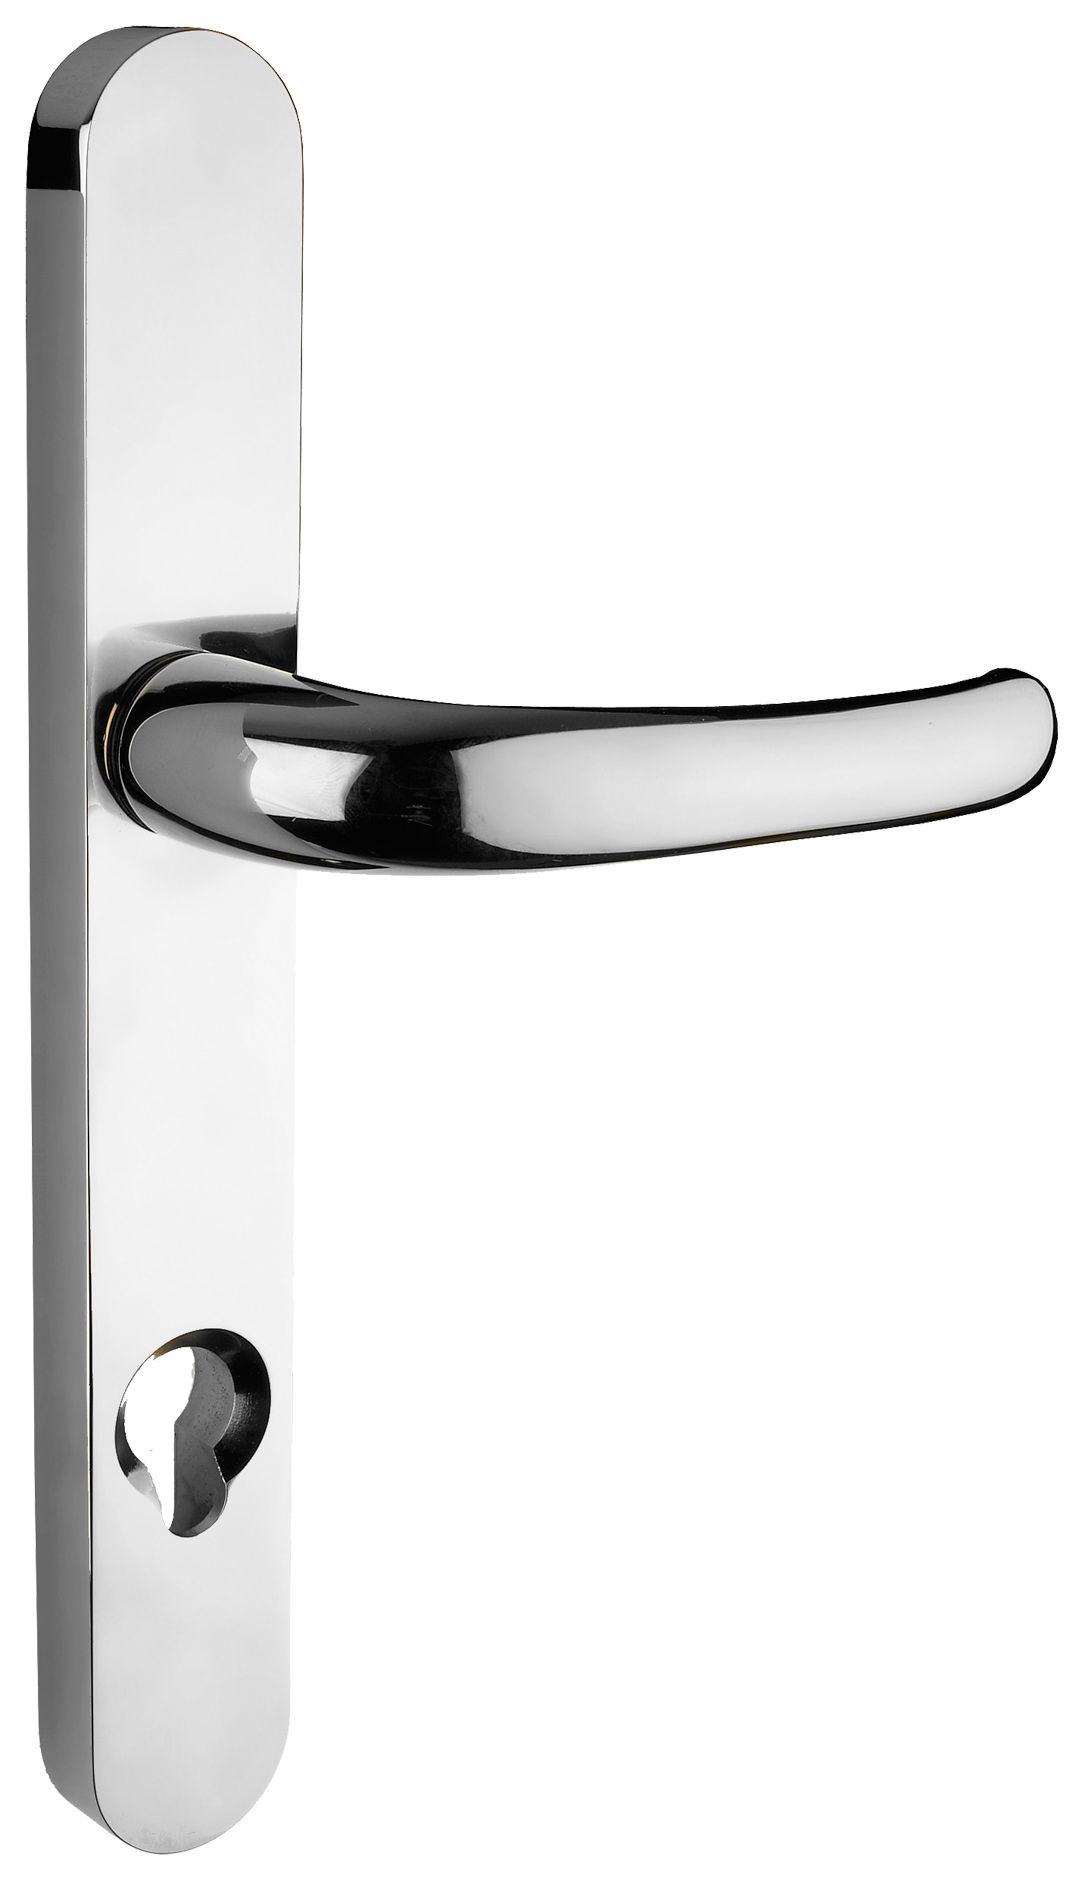 Yale MK3 Security Door Handle - Polished Chrome